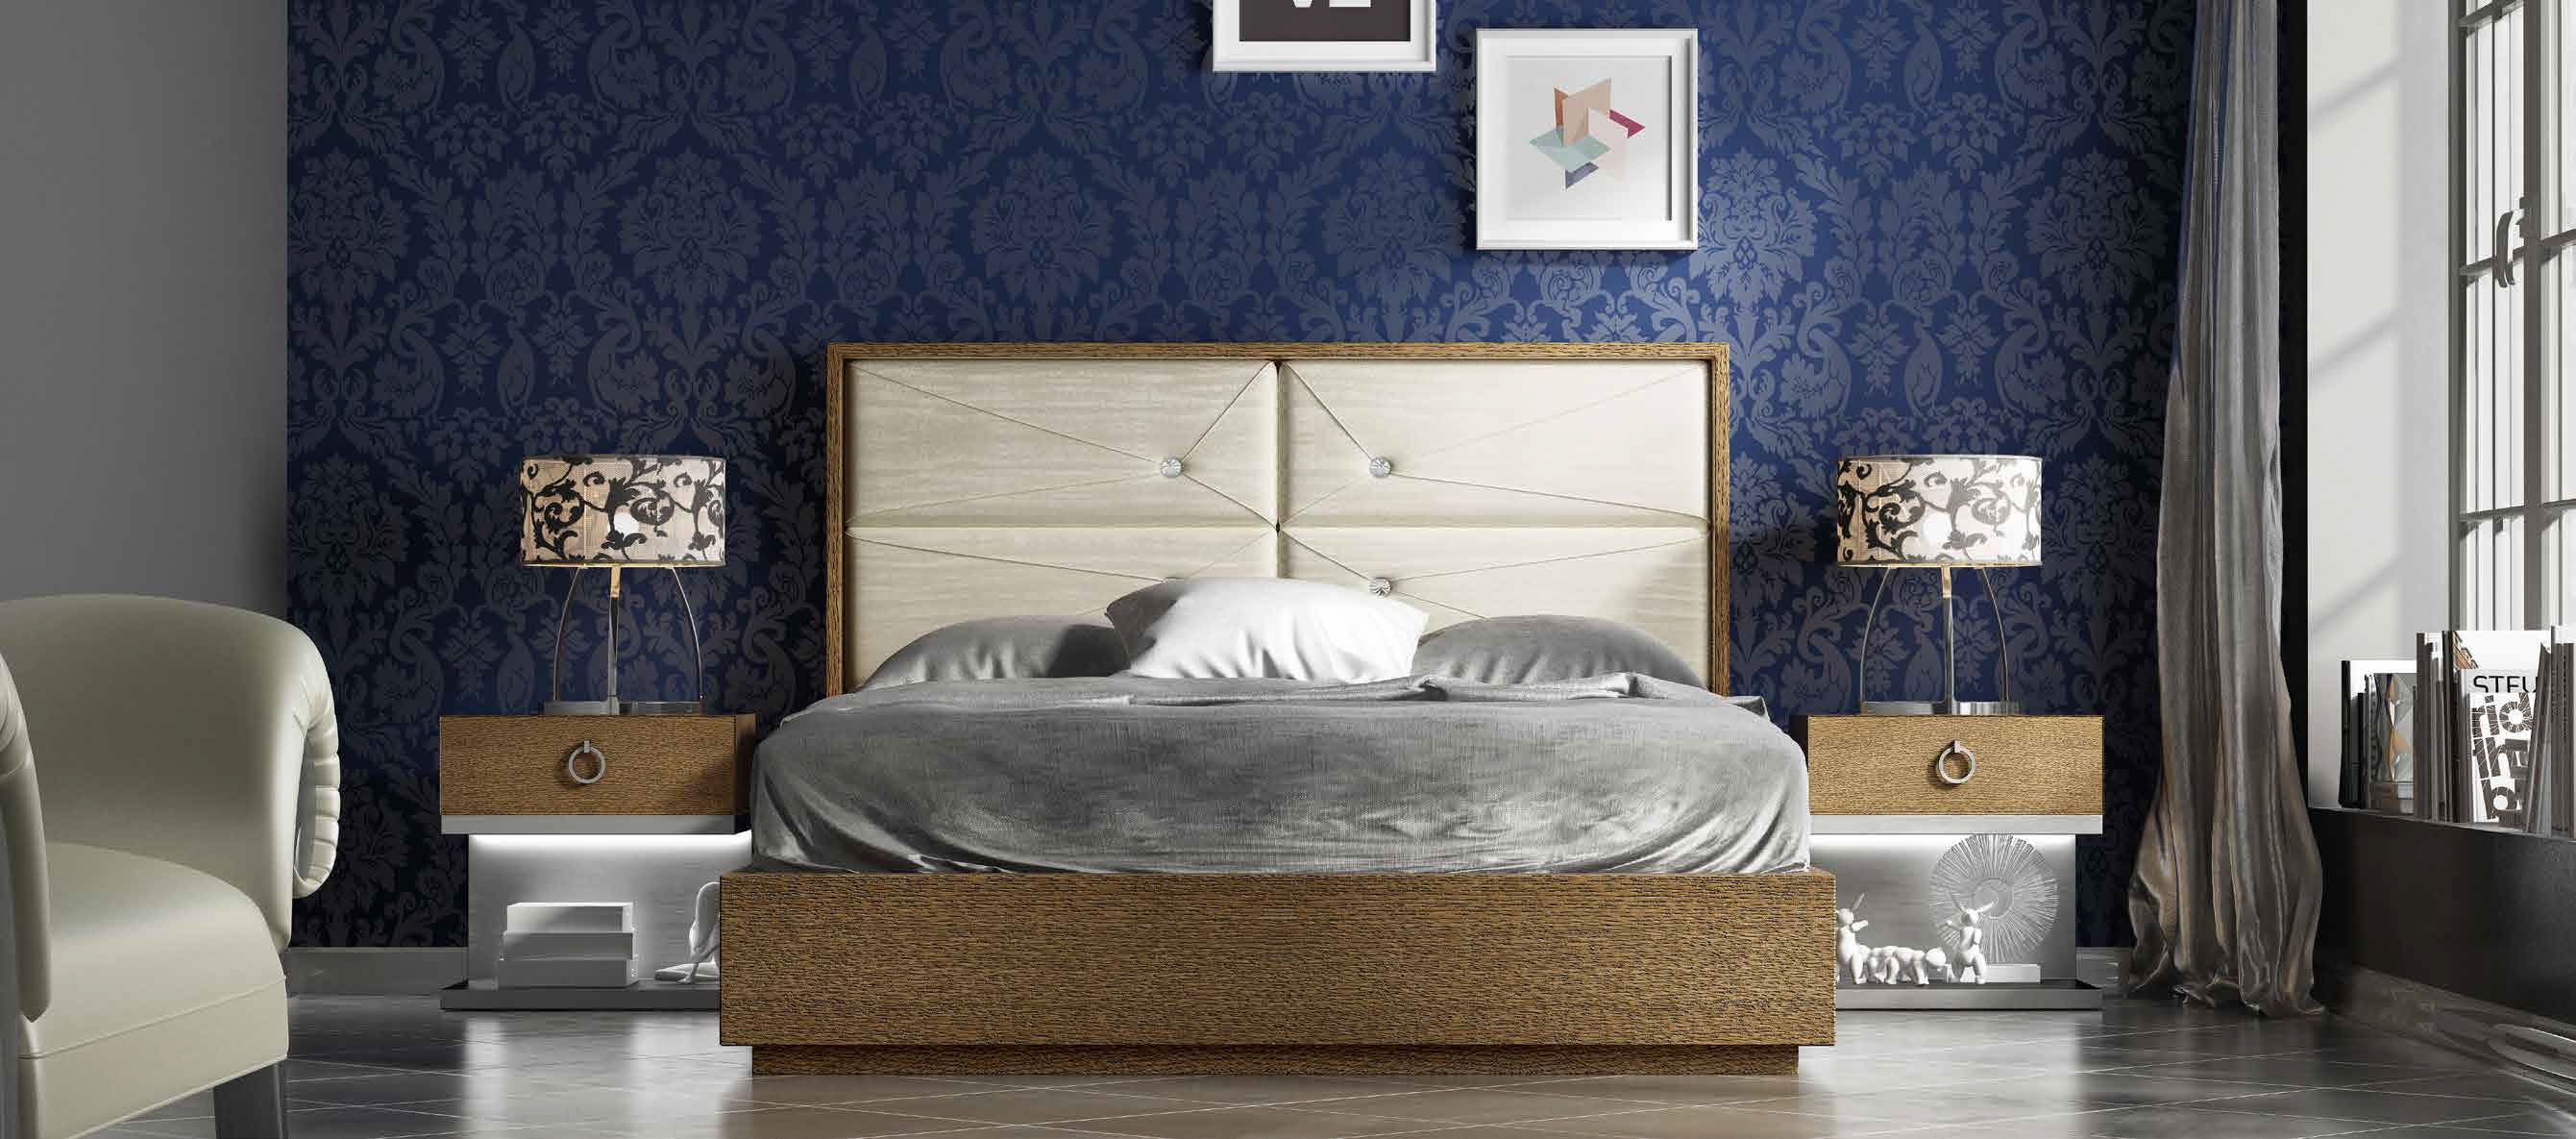 Brands Franco Furniture Bedrooms vol2, Spain DOR 39